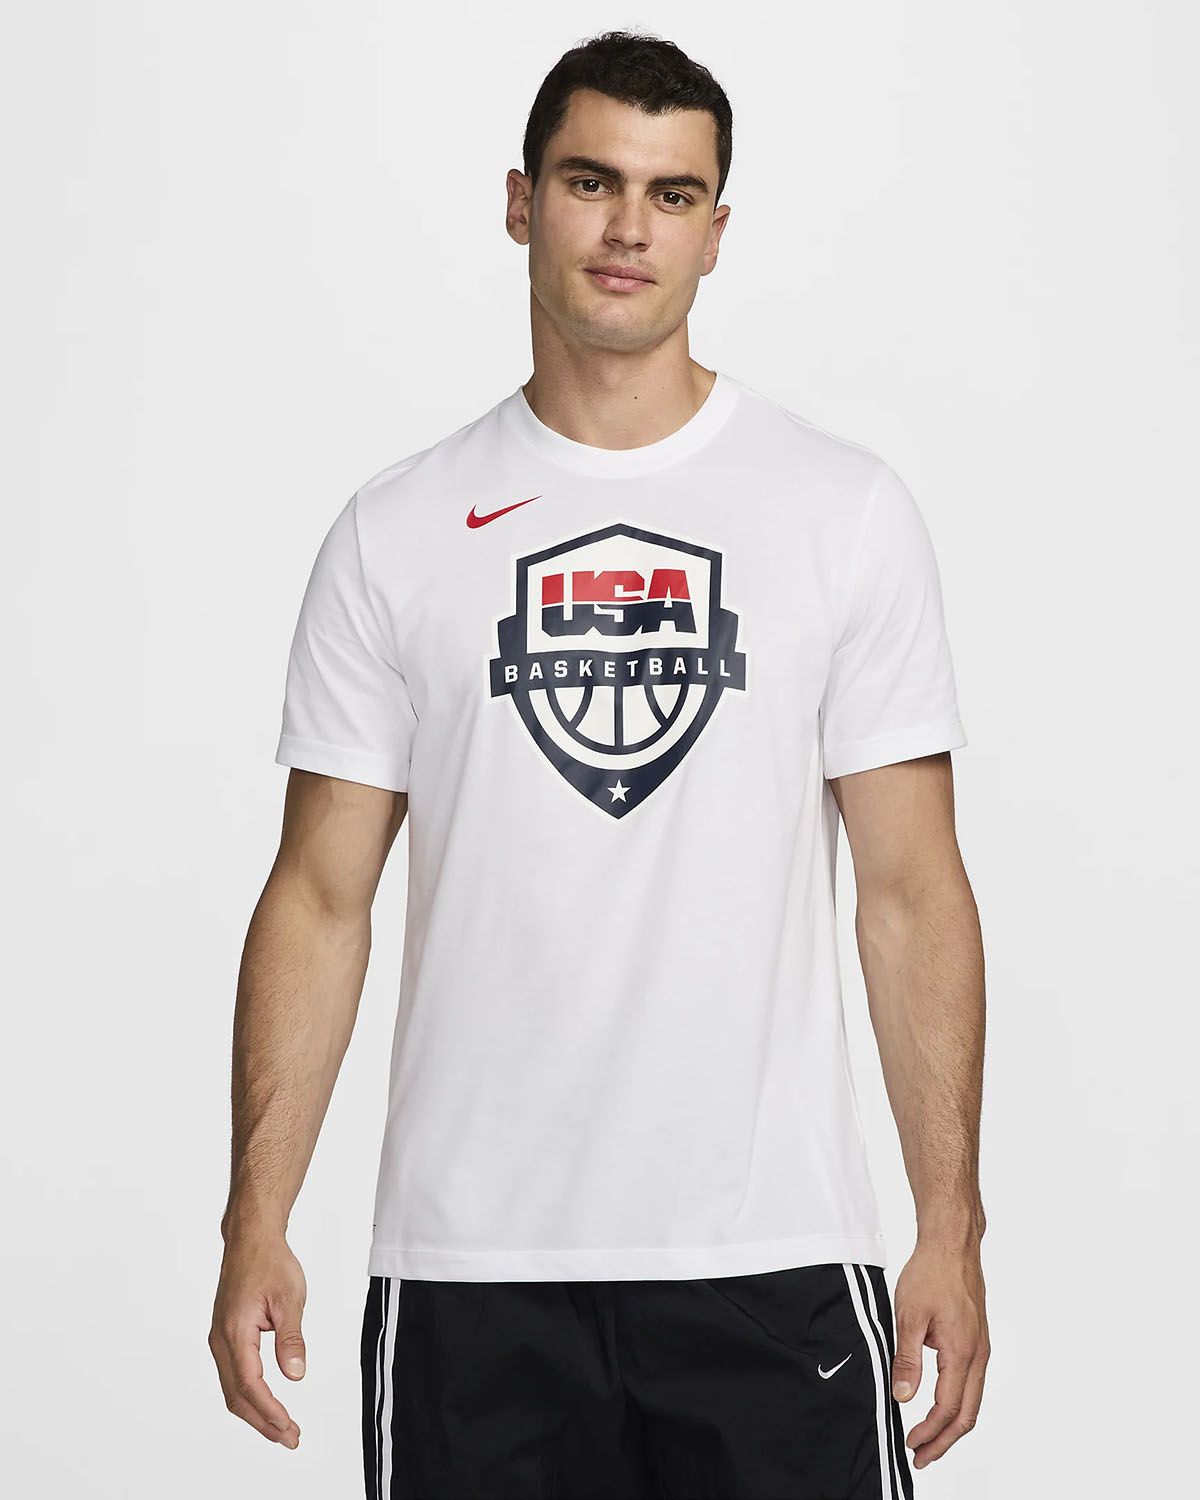 Nike USA Basketball T Shirt White